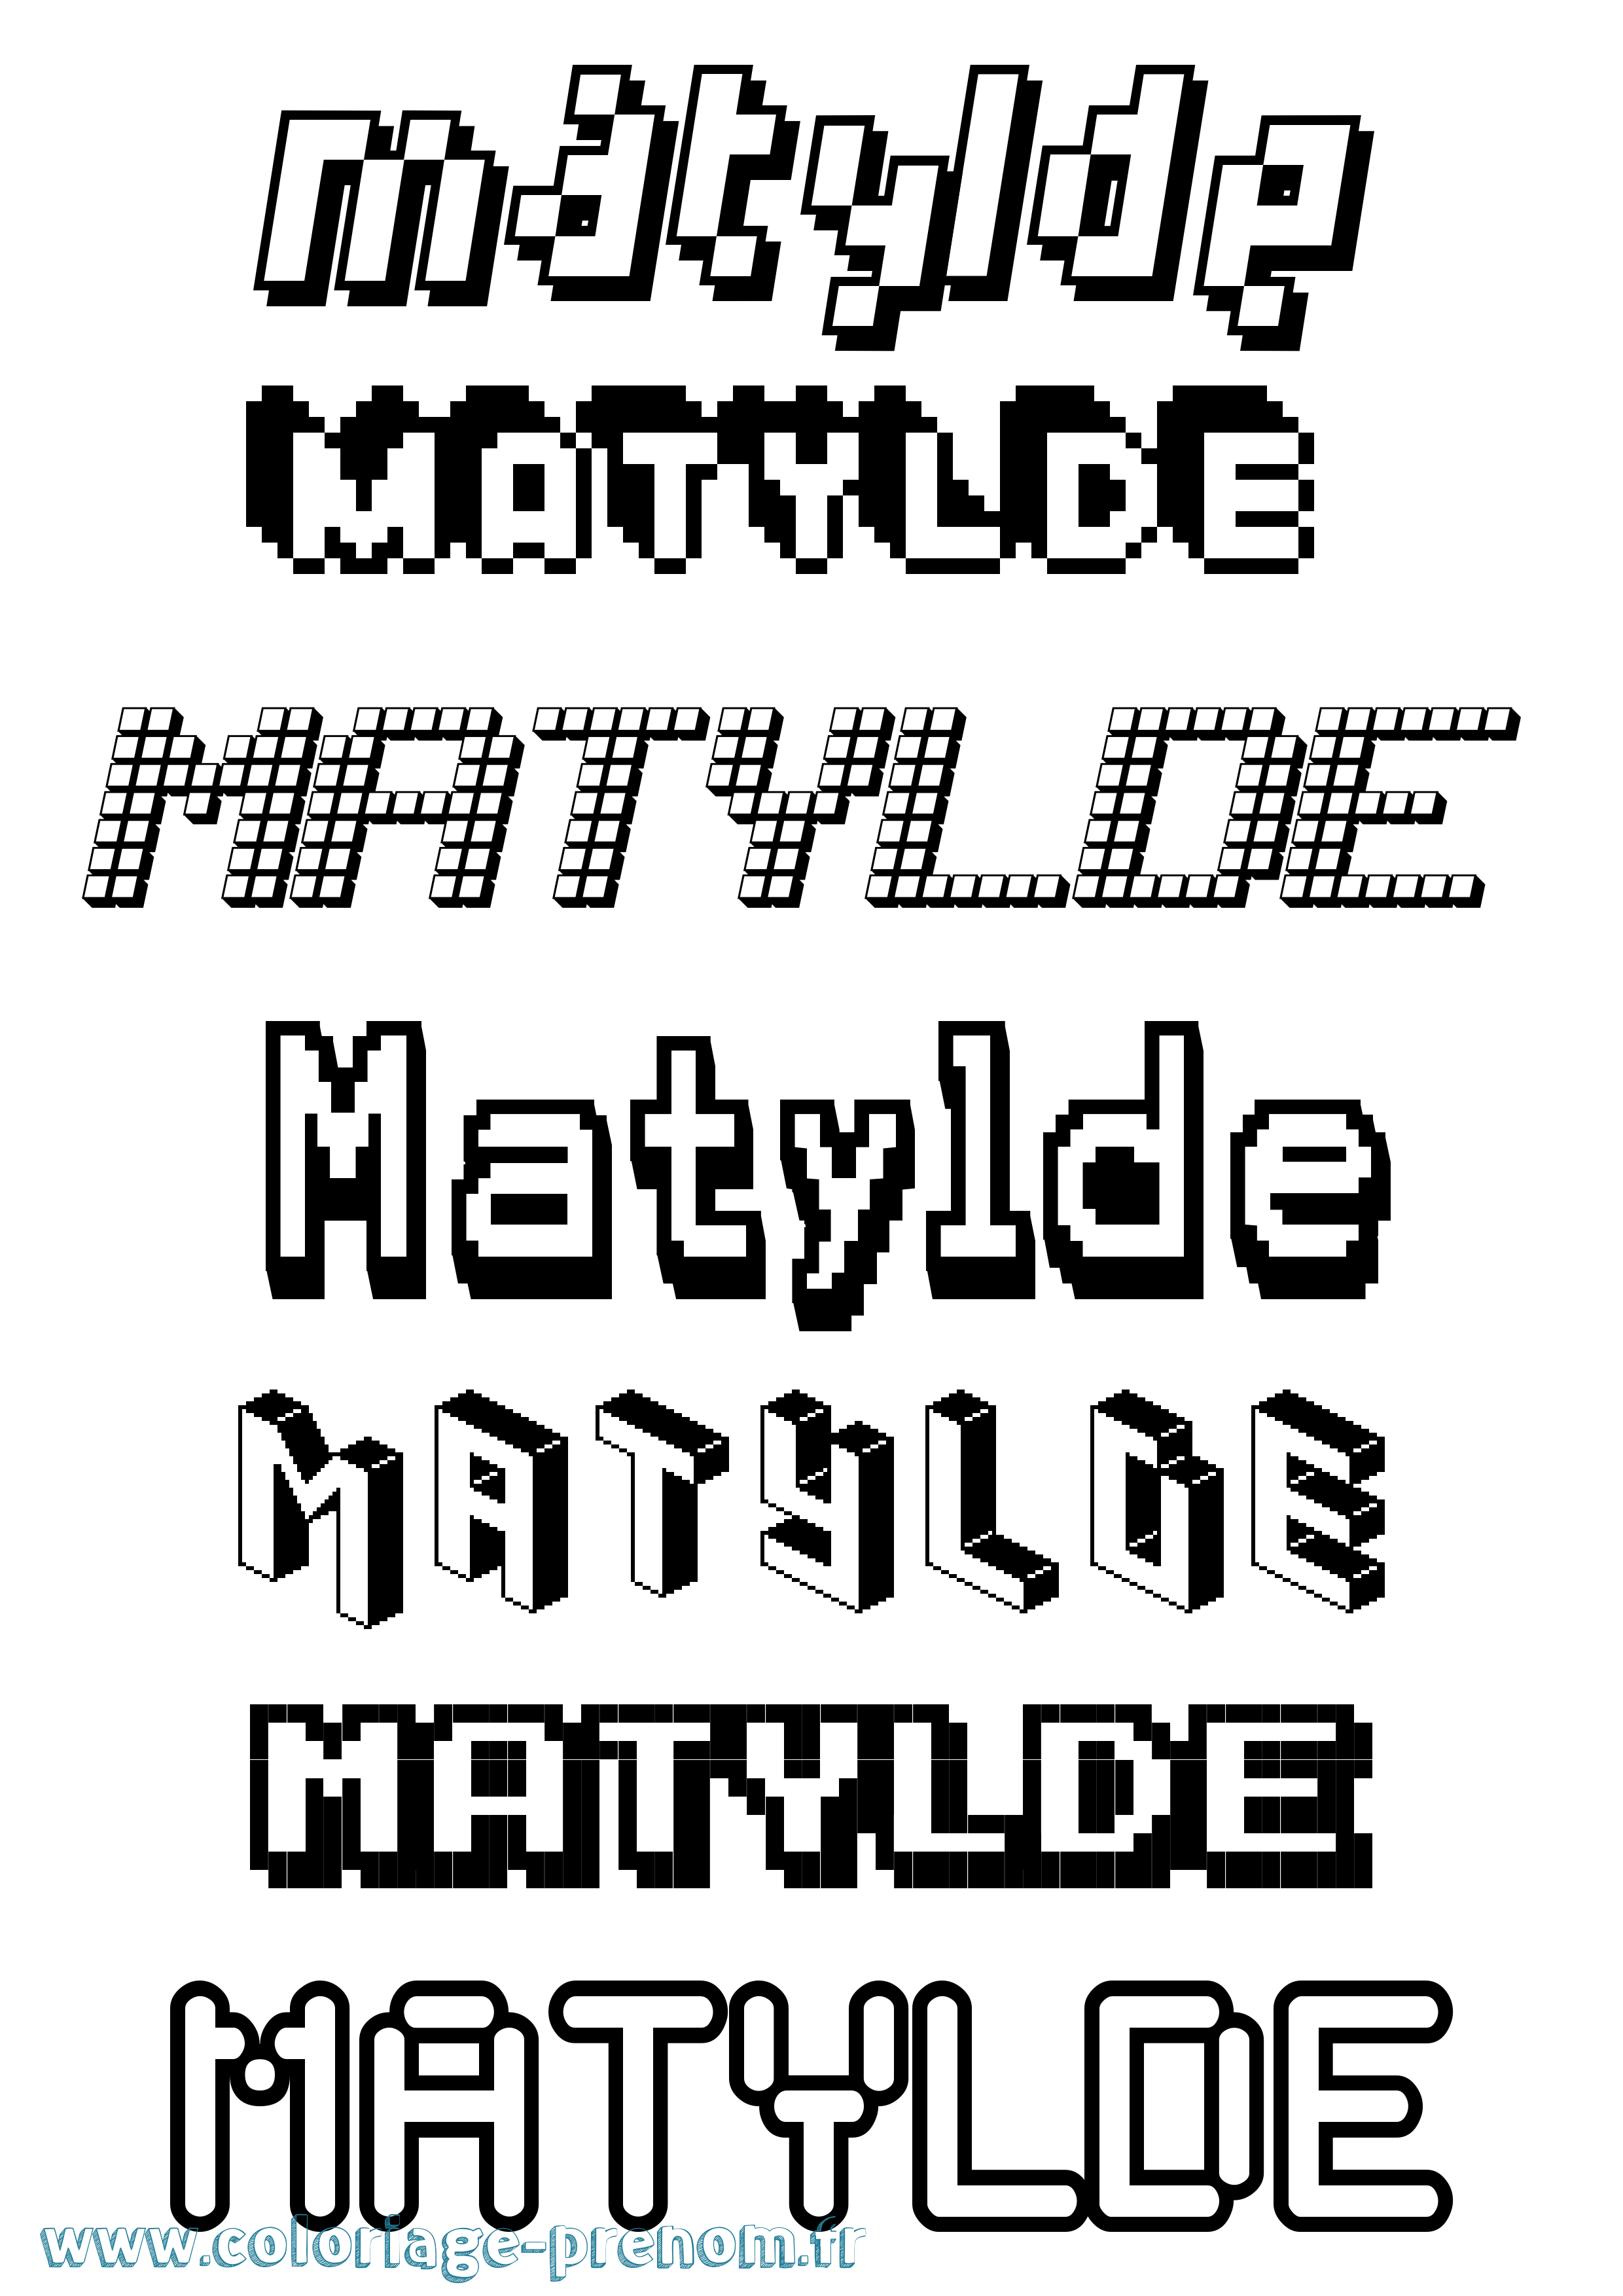 Coloriage prénom Matylde Pixel